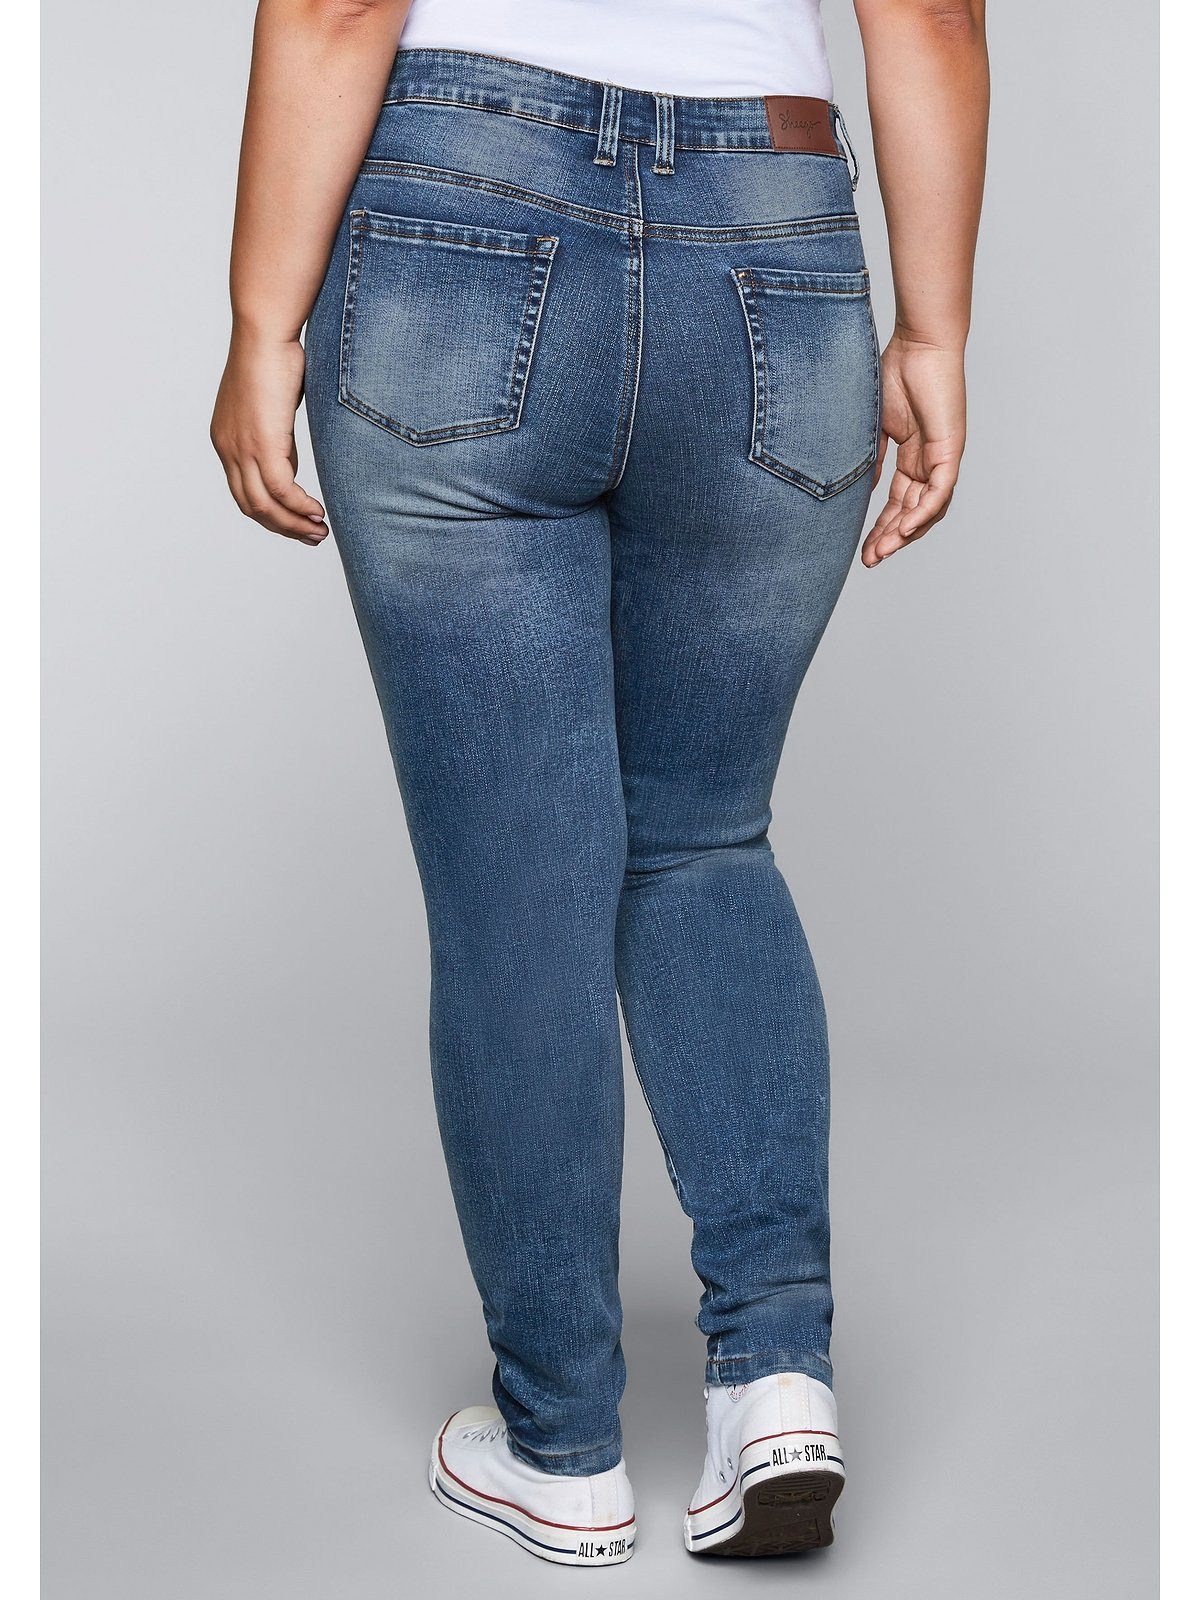 Große Bodyforming-Effekt mit Sheego Denim Größen Skinny blue Stretch-Jeans